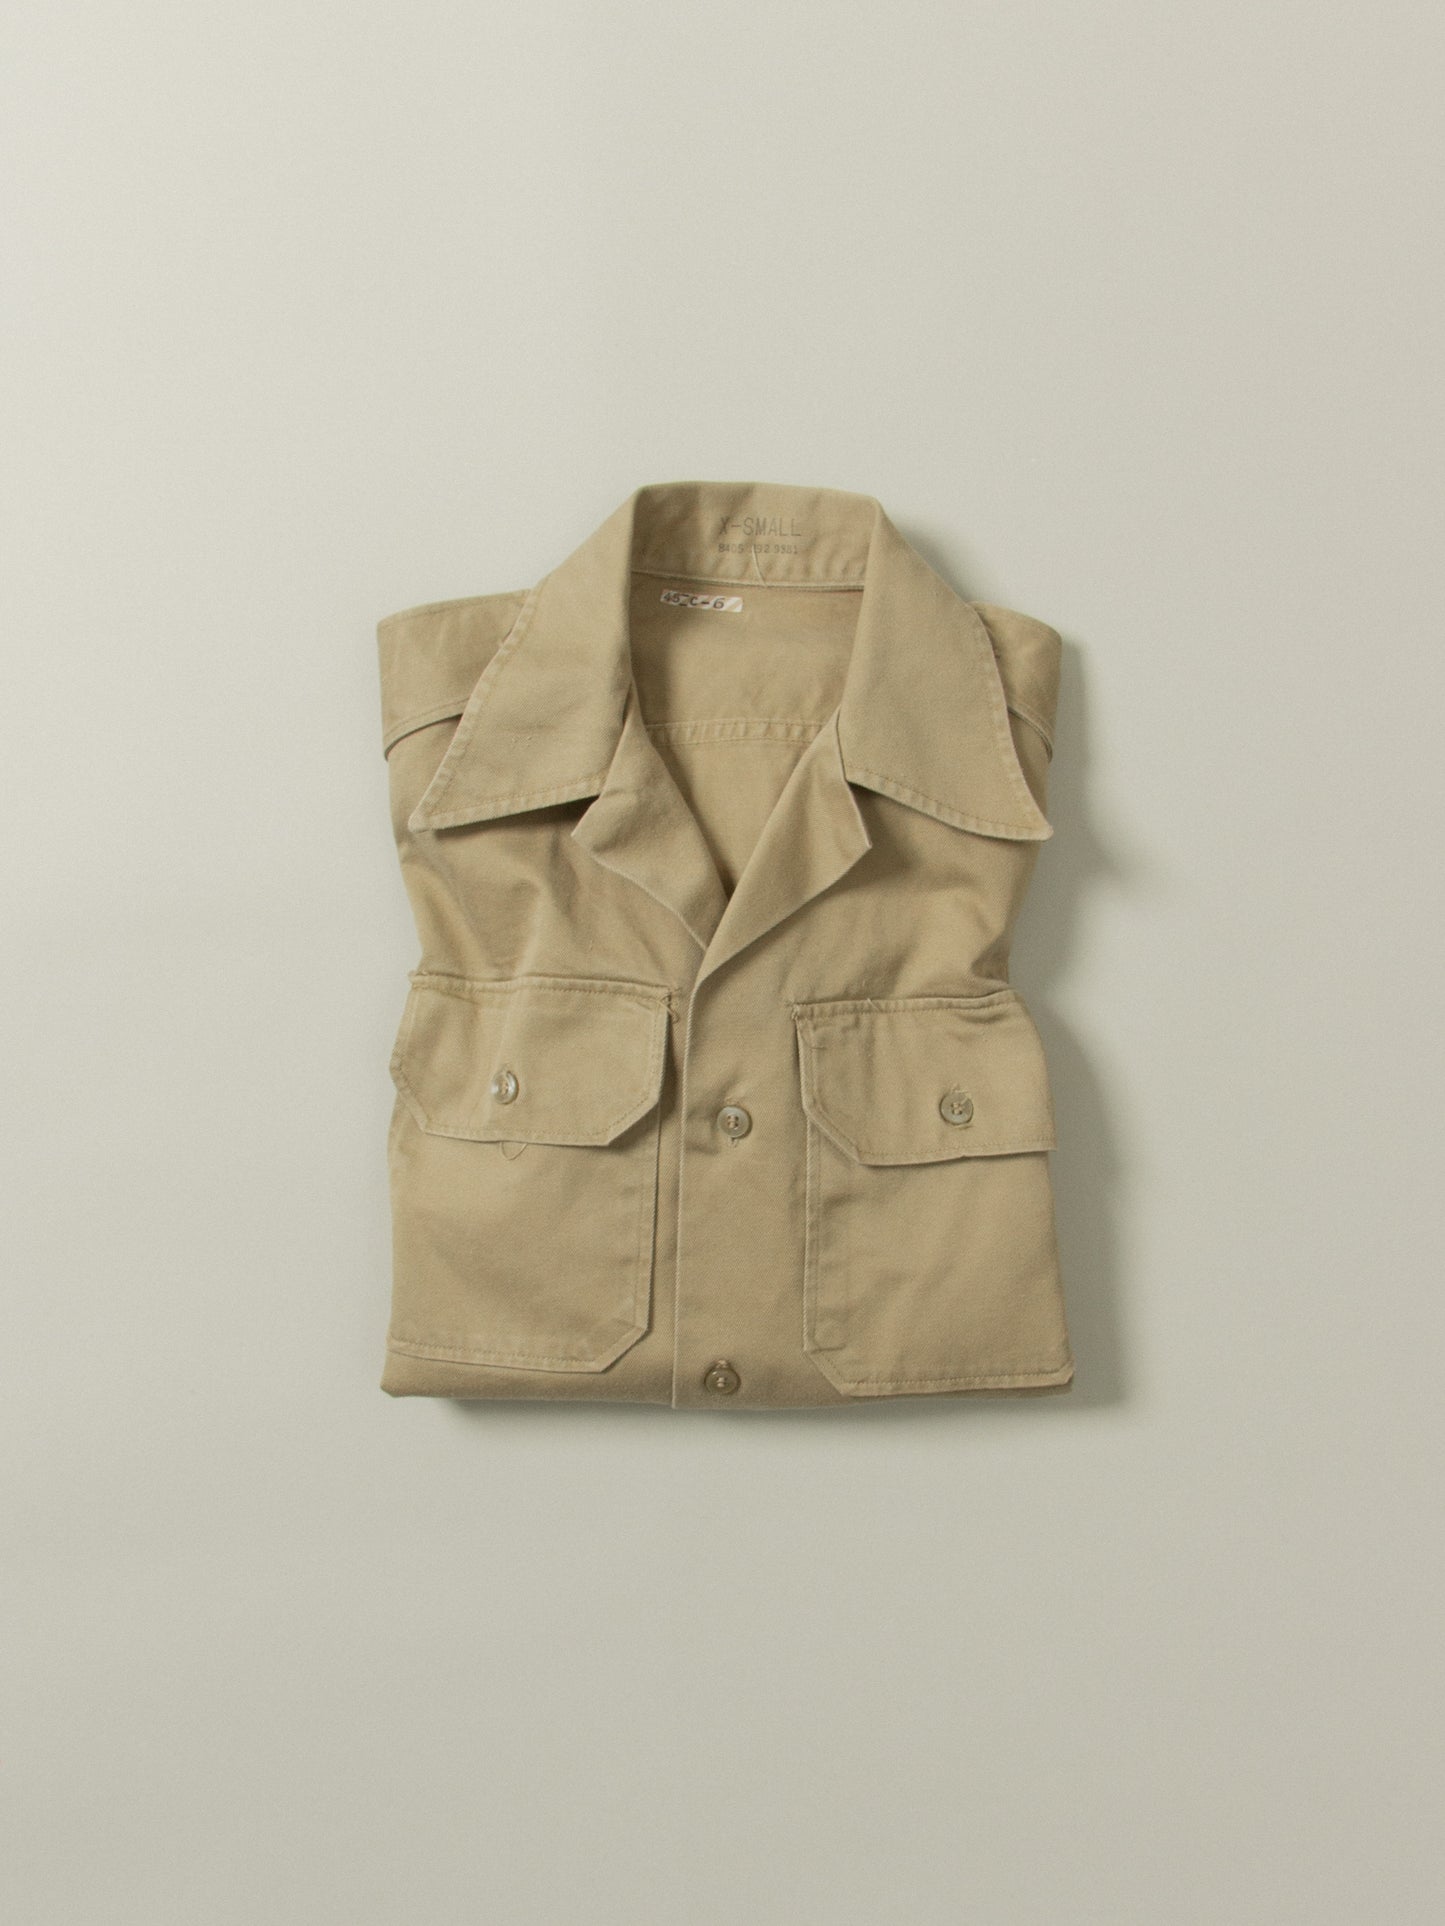 Vtg 1950s US Army Camp Collar Shirt (XS)